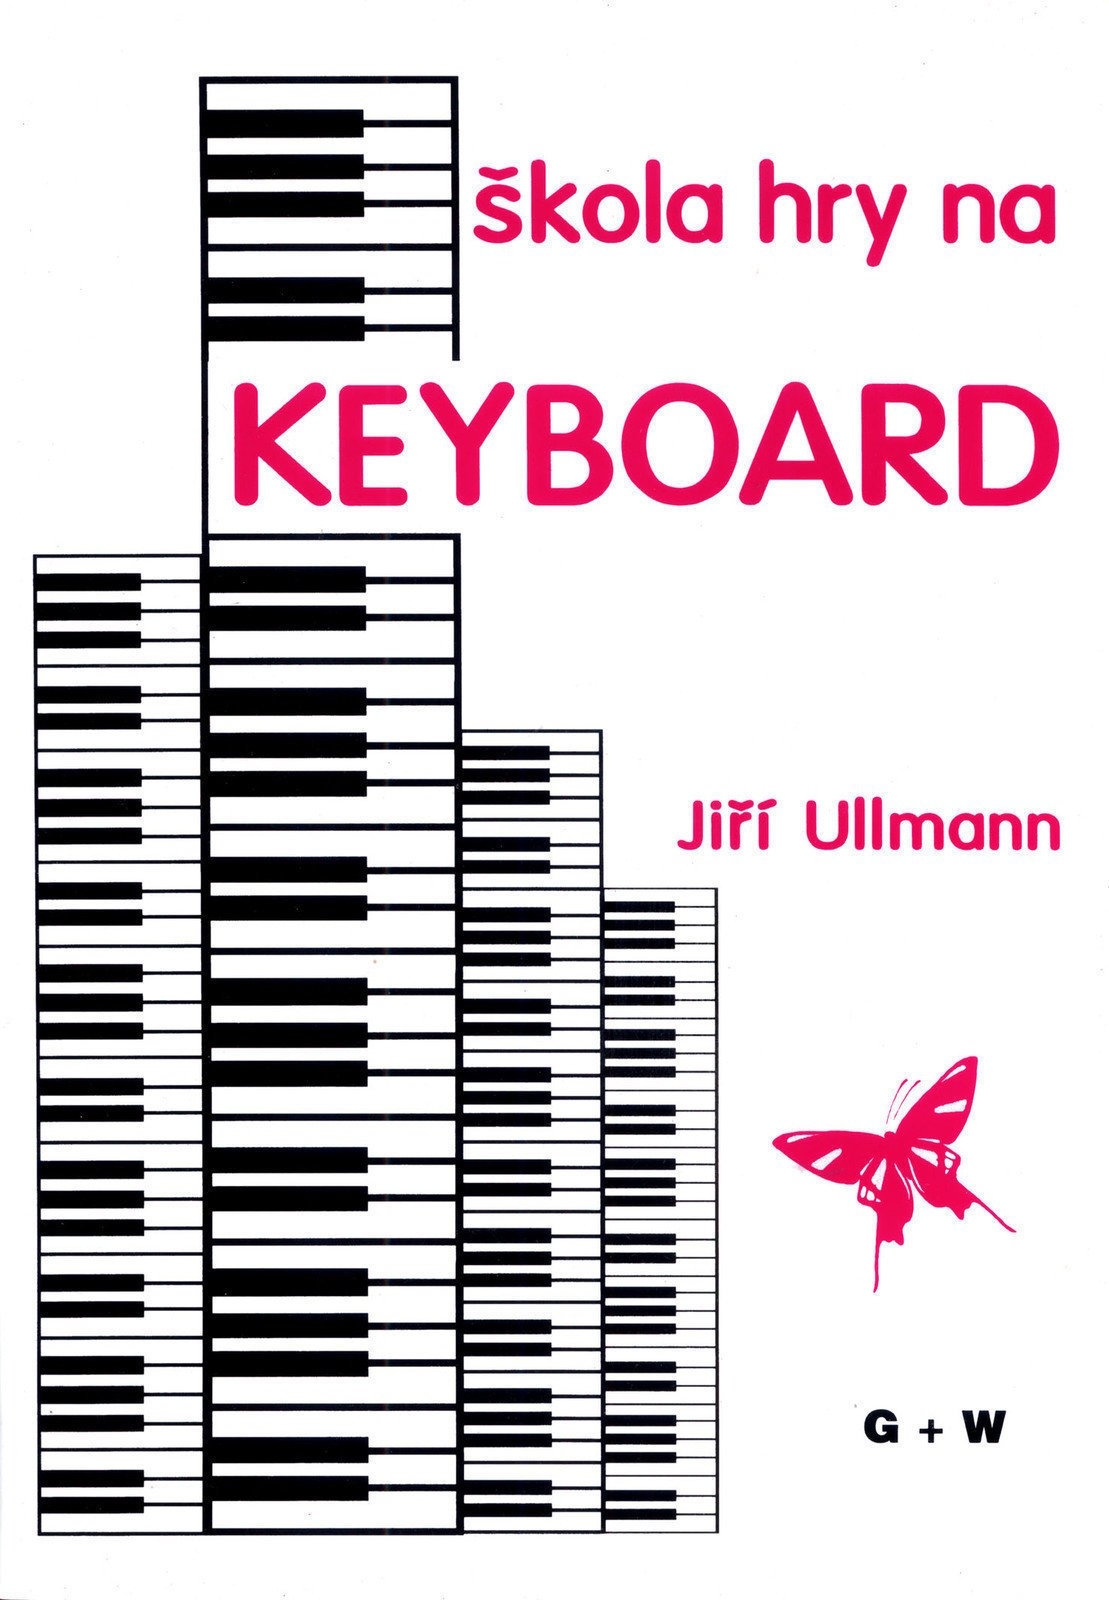 Solistisk vokallitteratur Jiří Ullmann Škola hry na keyboard Musik bog